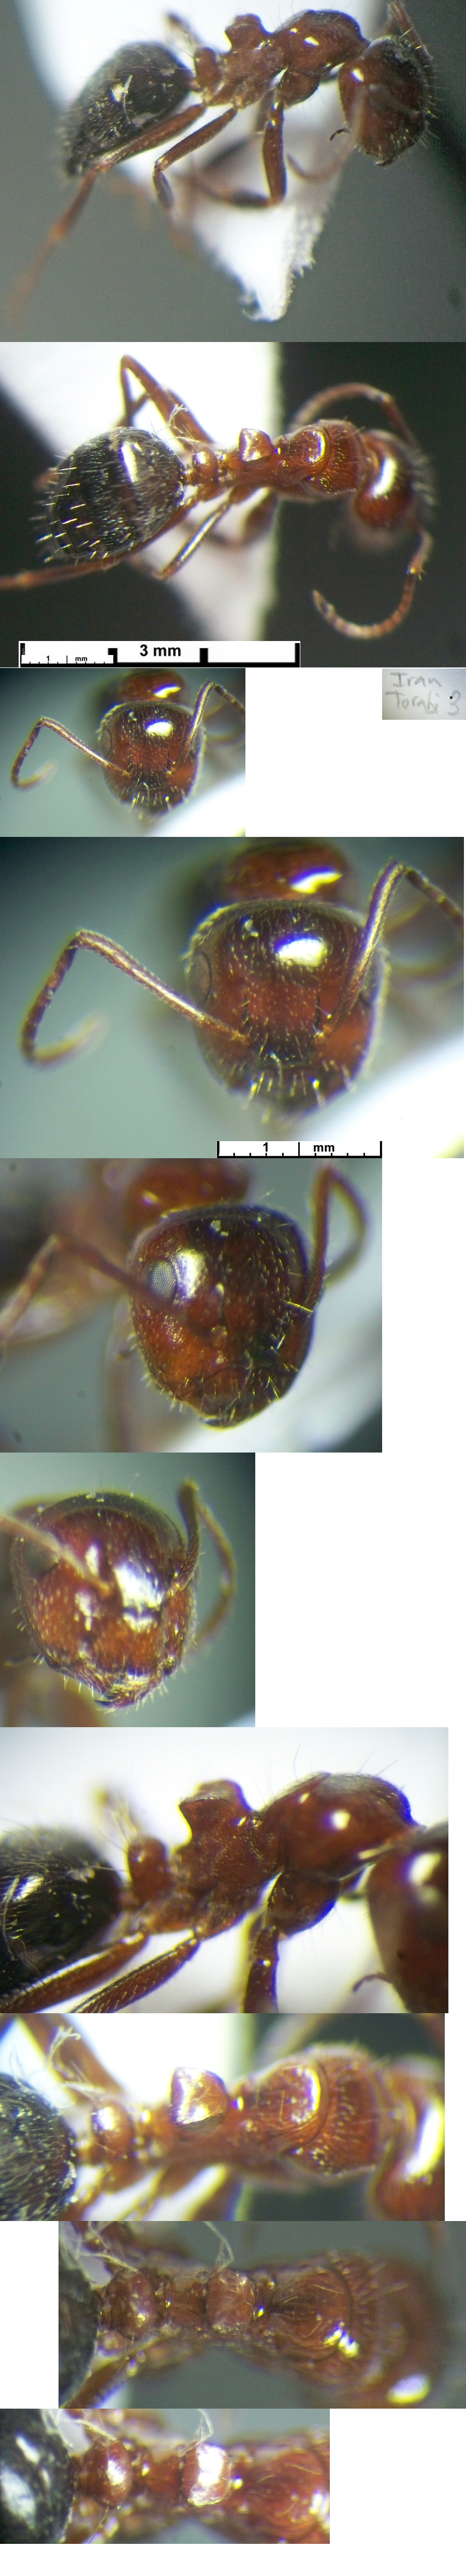 Camponotus staryi minor